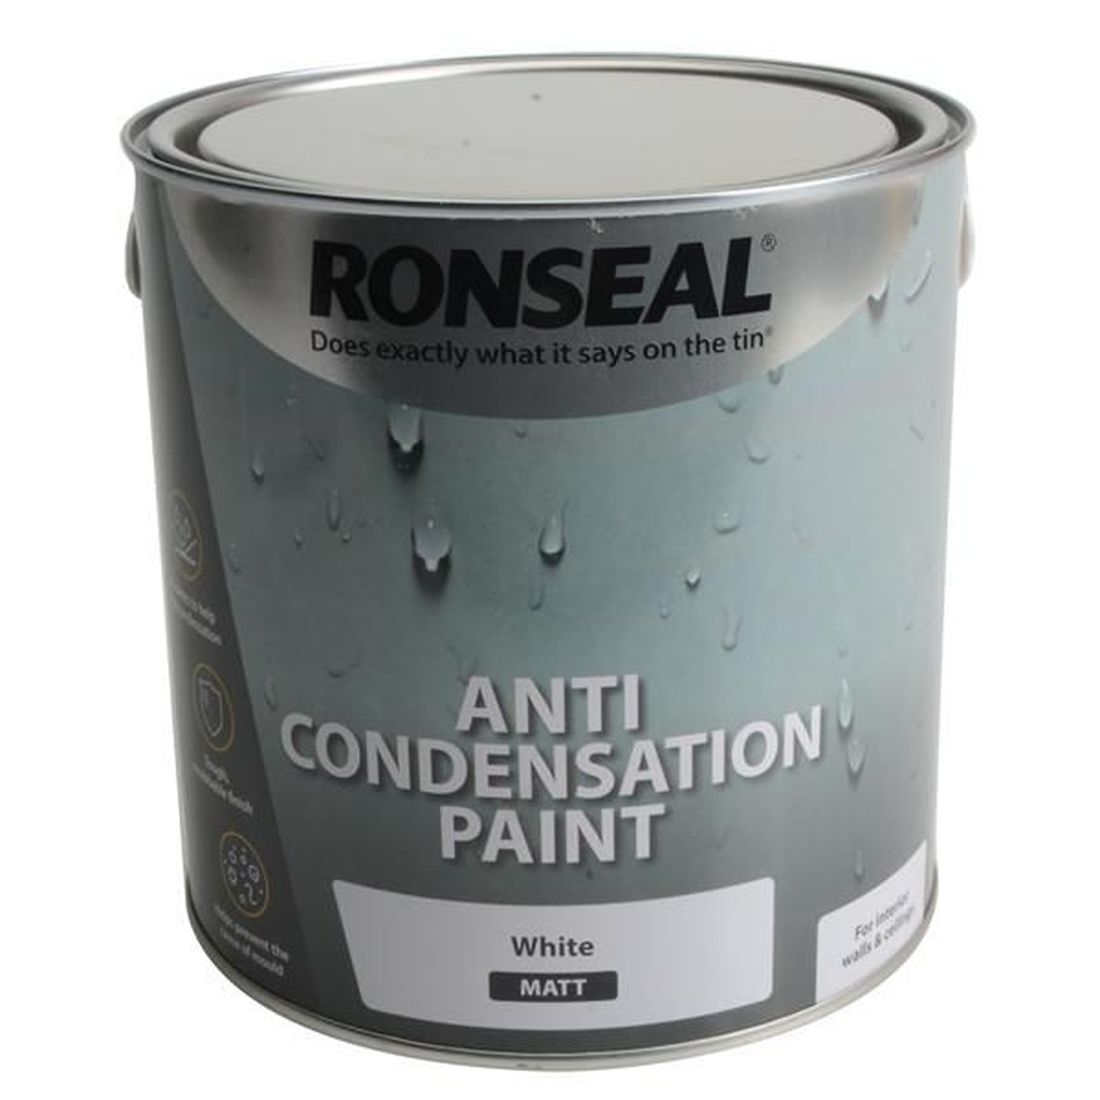 Ronseal Anti Condensation Paint White Matt 2.5 litre                                    